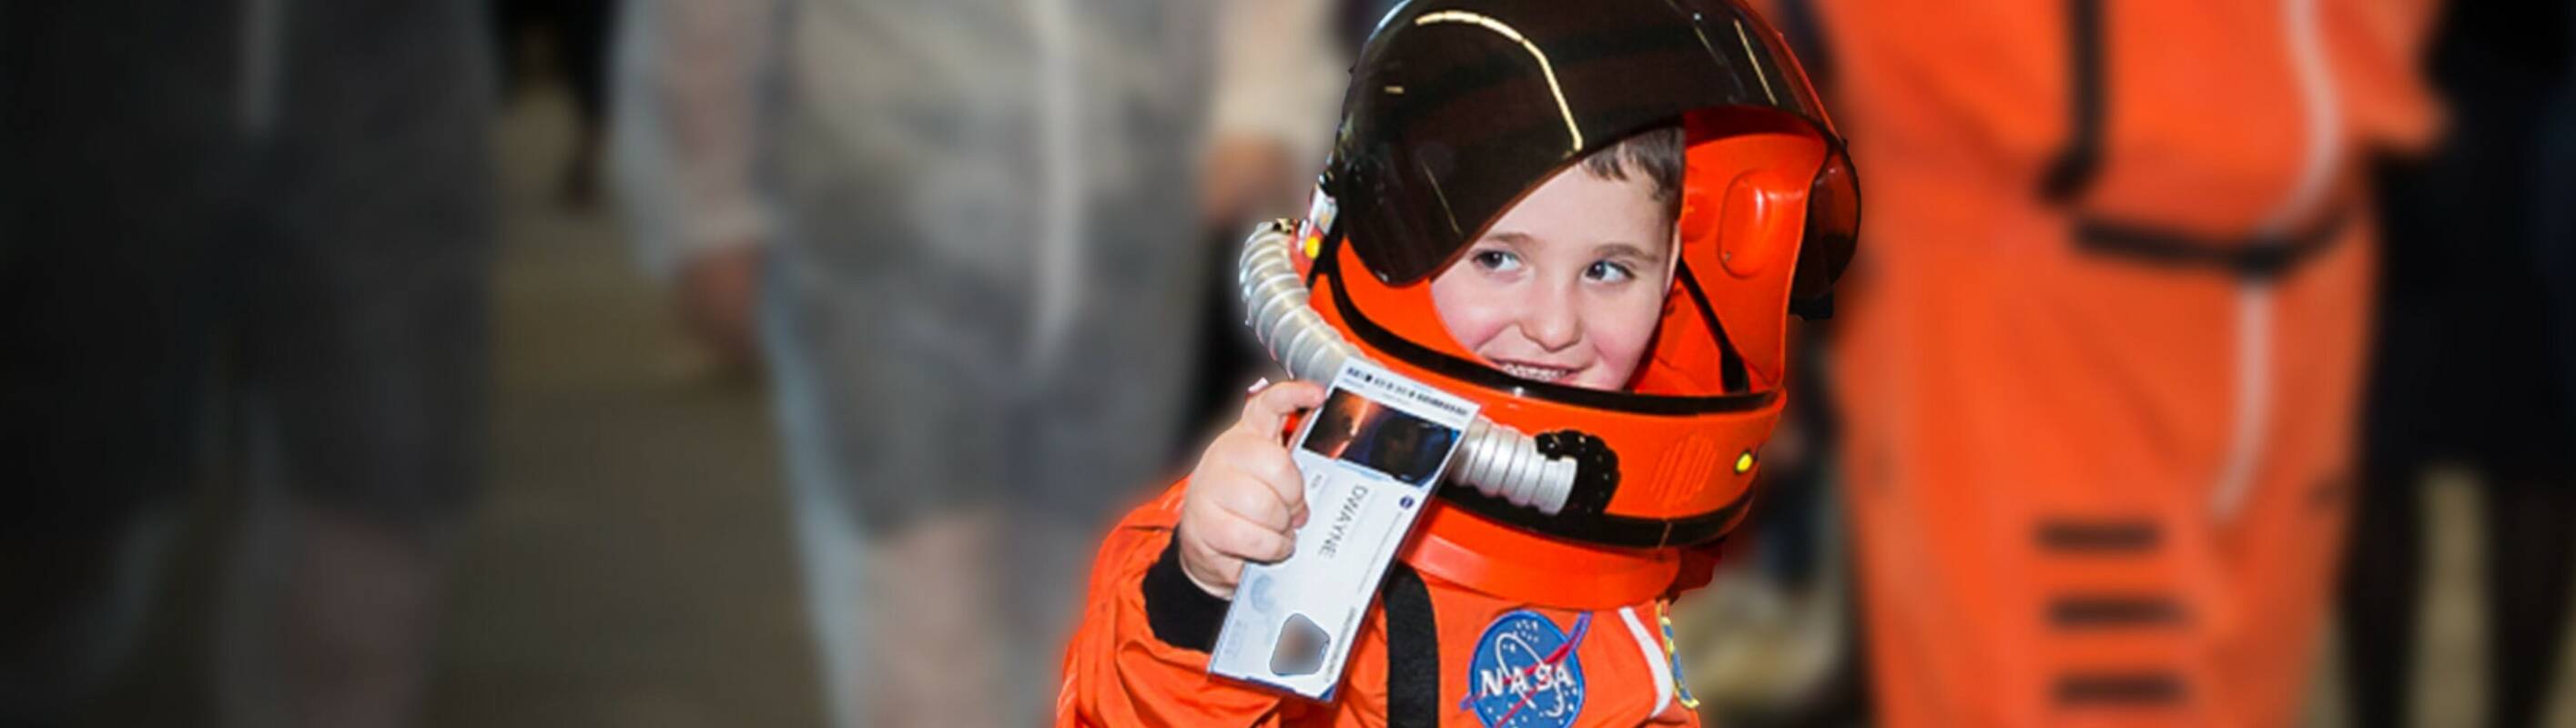 Make-A-Wish Australia wish kid Dwayne wearing his NASA astronaut spacesuit